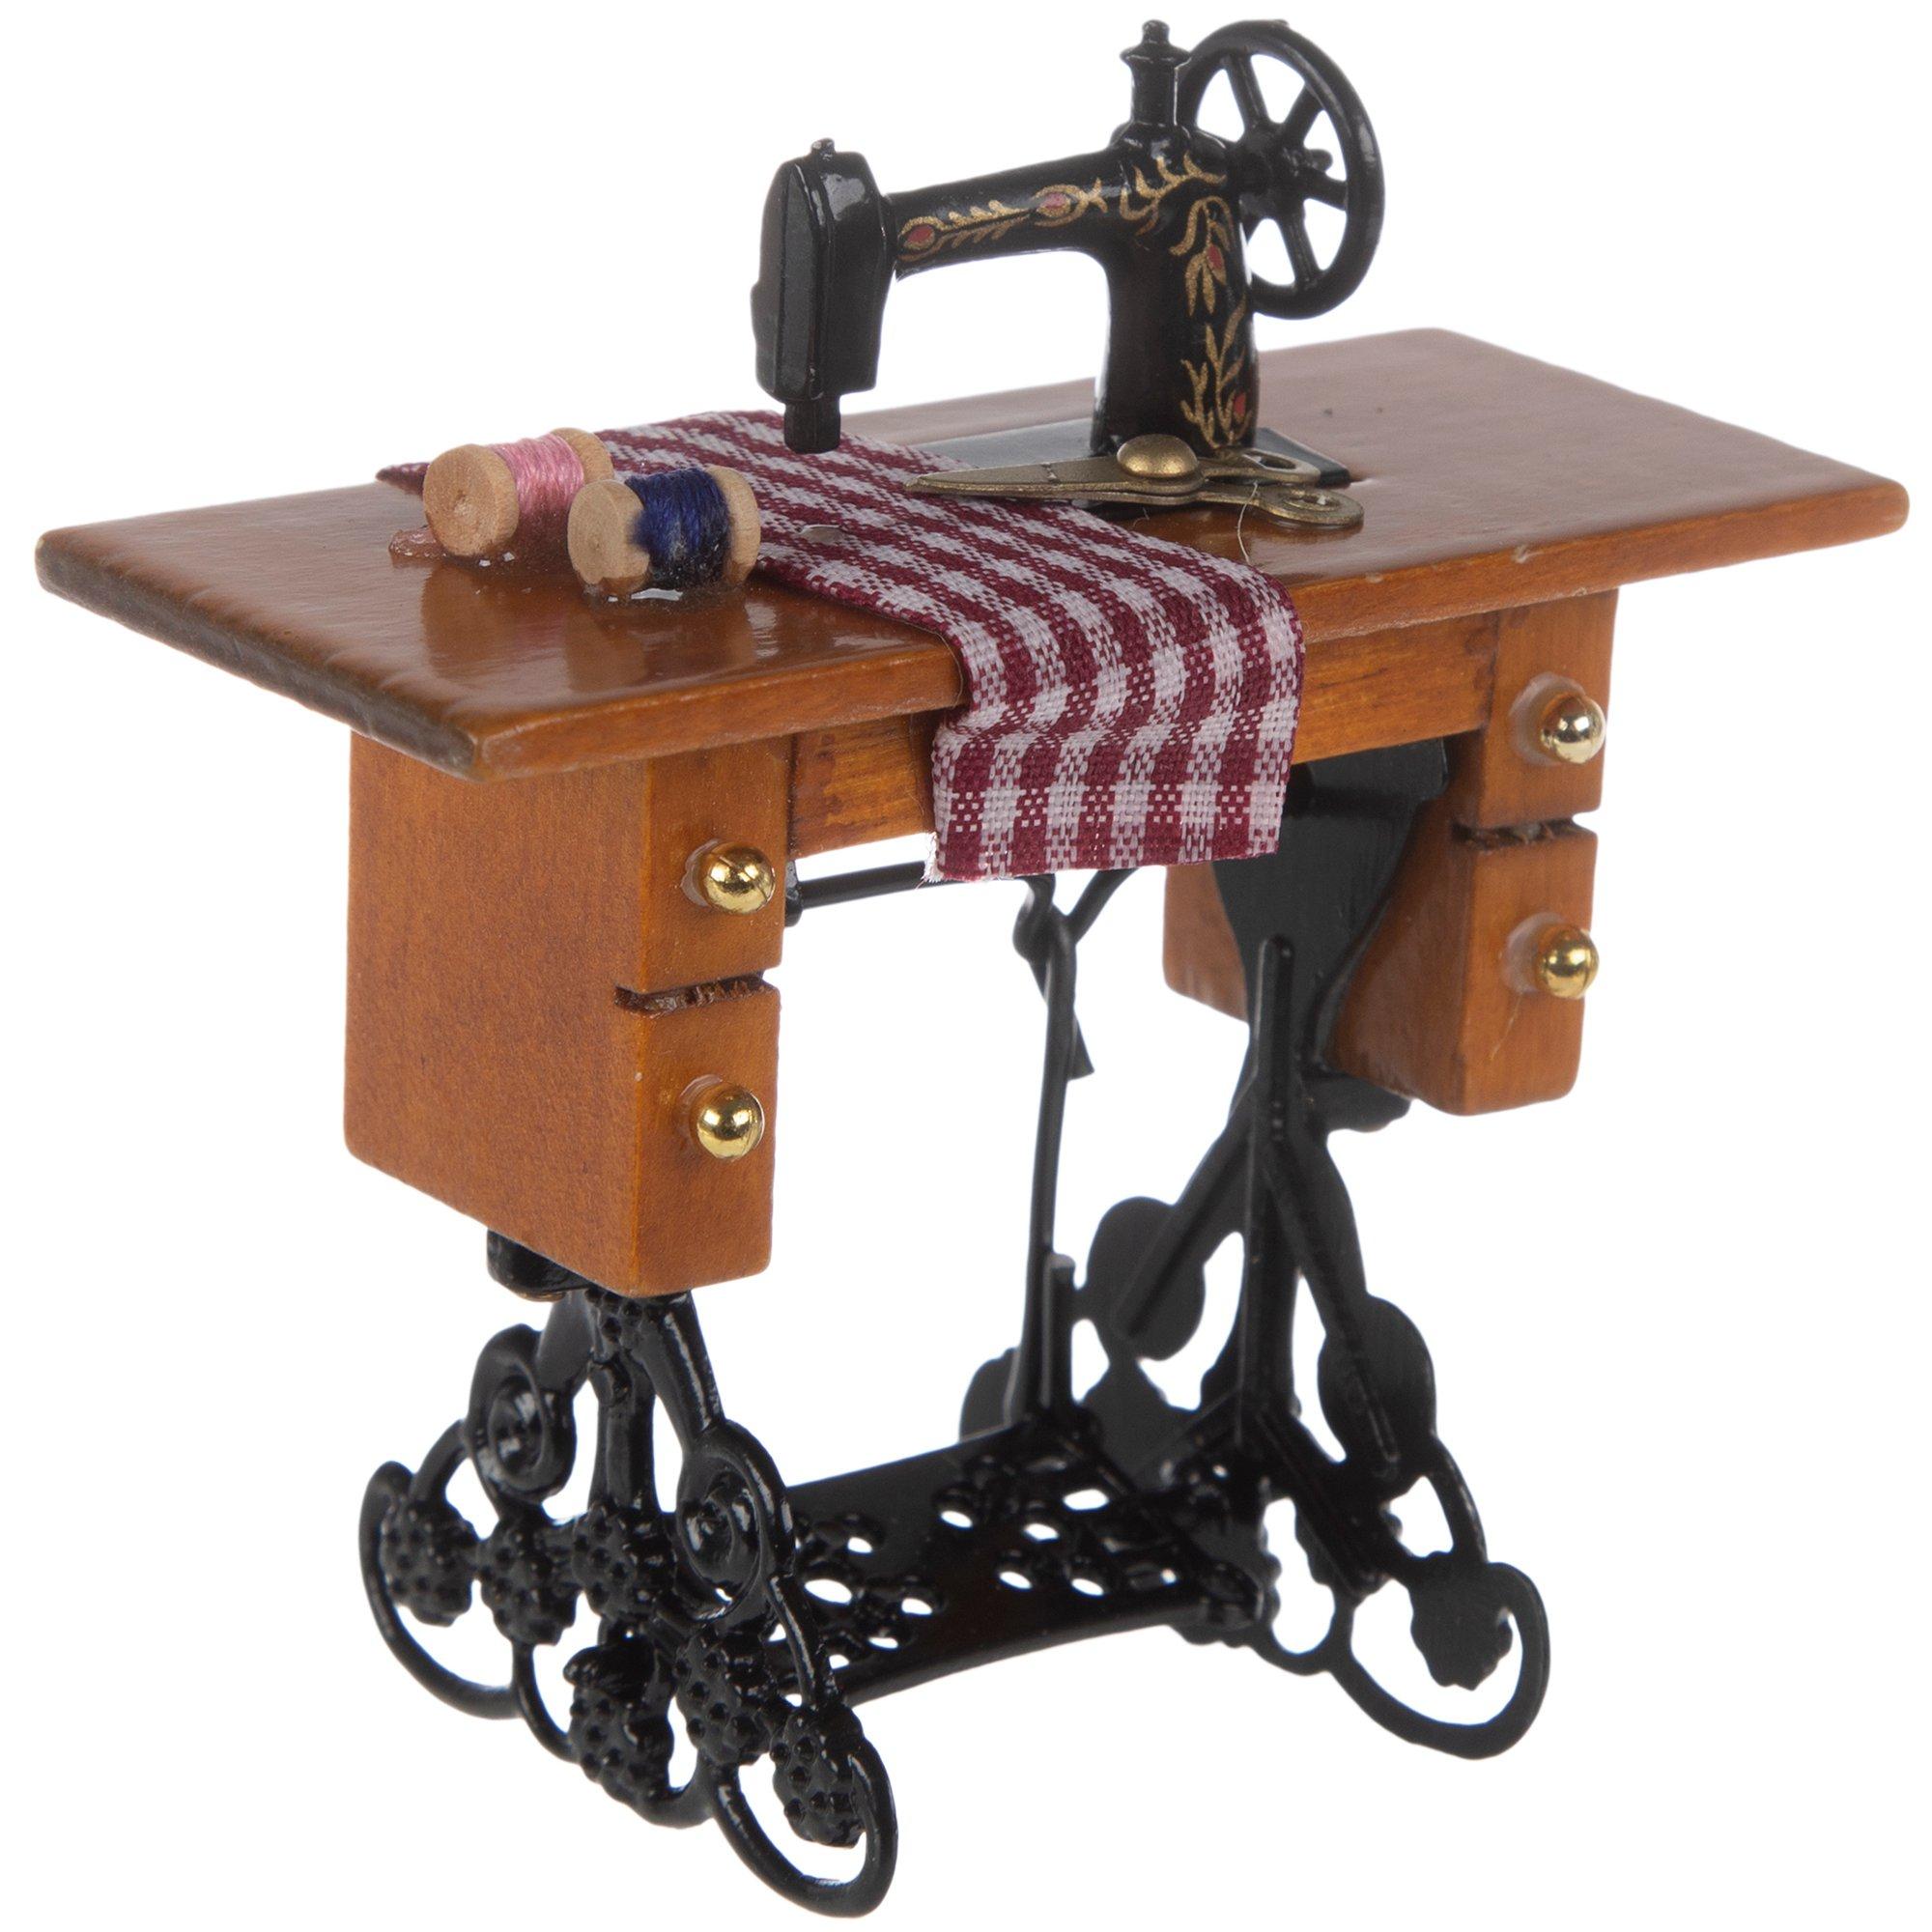 Shop Hearth & Harbor Mini Sewing Machine at Artsy Sister.